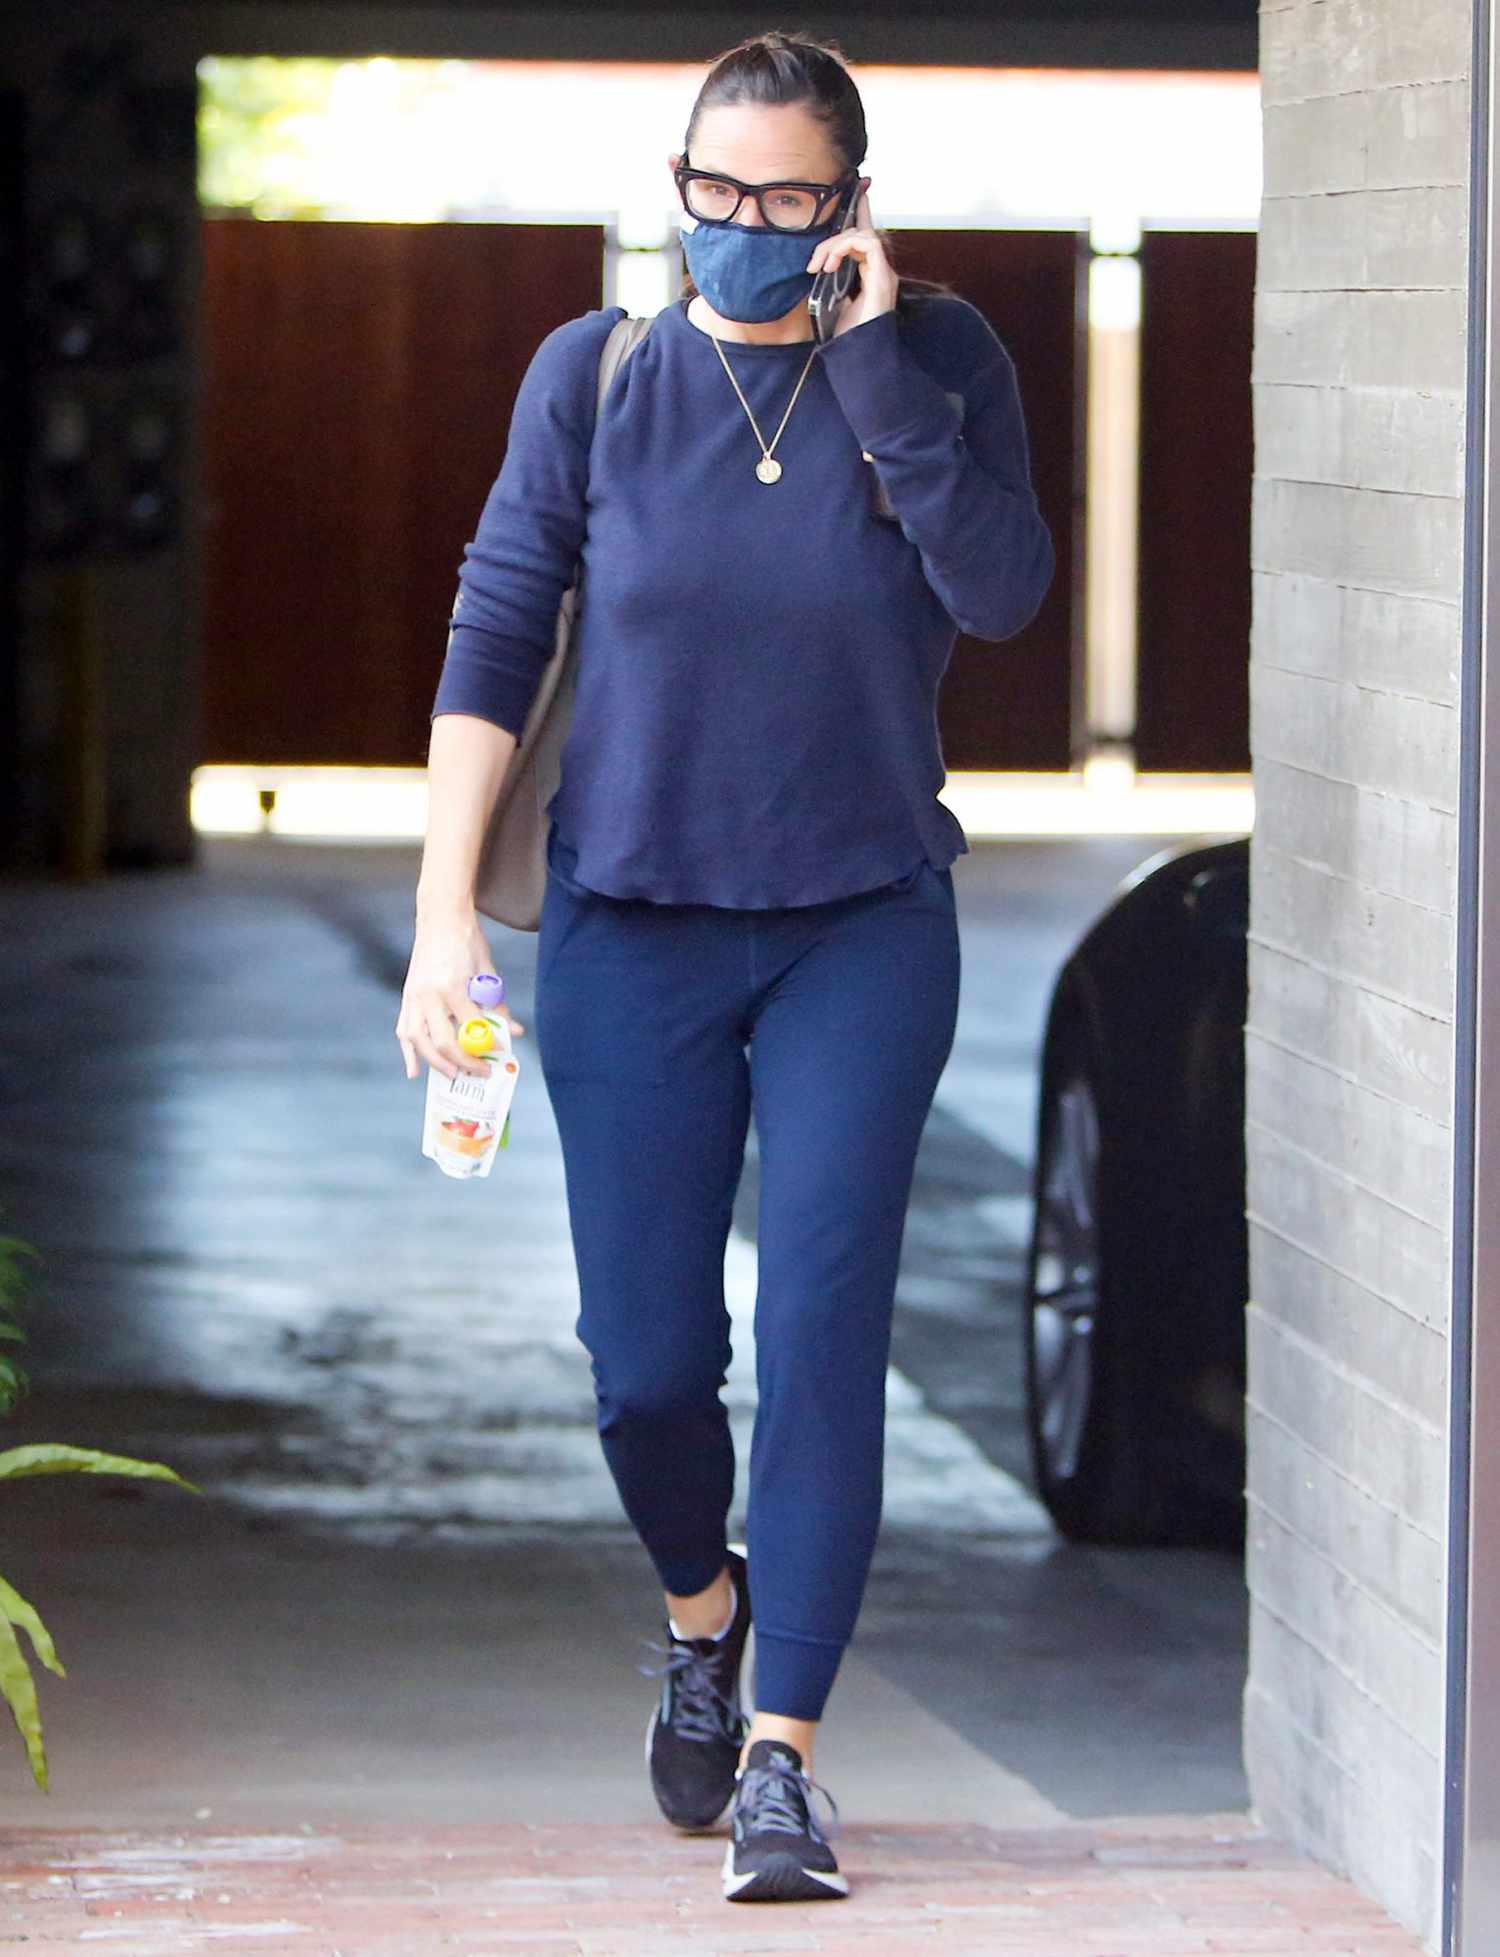 Jennifer Garner is seen exiting a parking garage on the phone